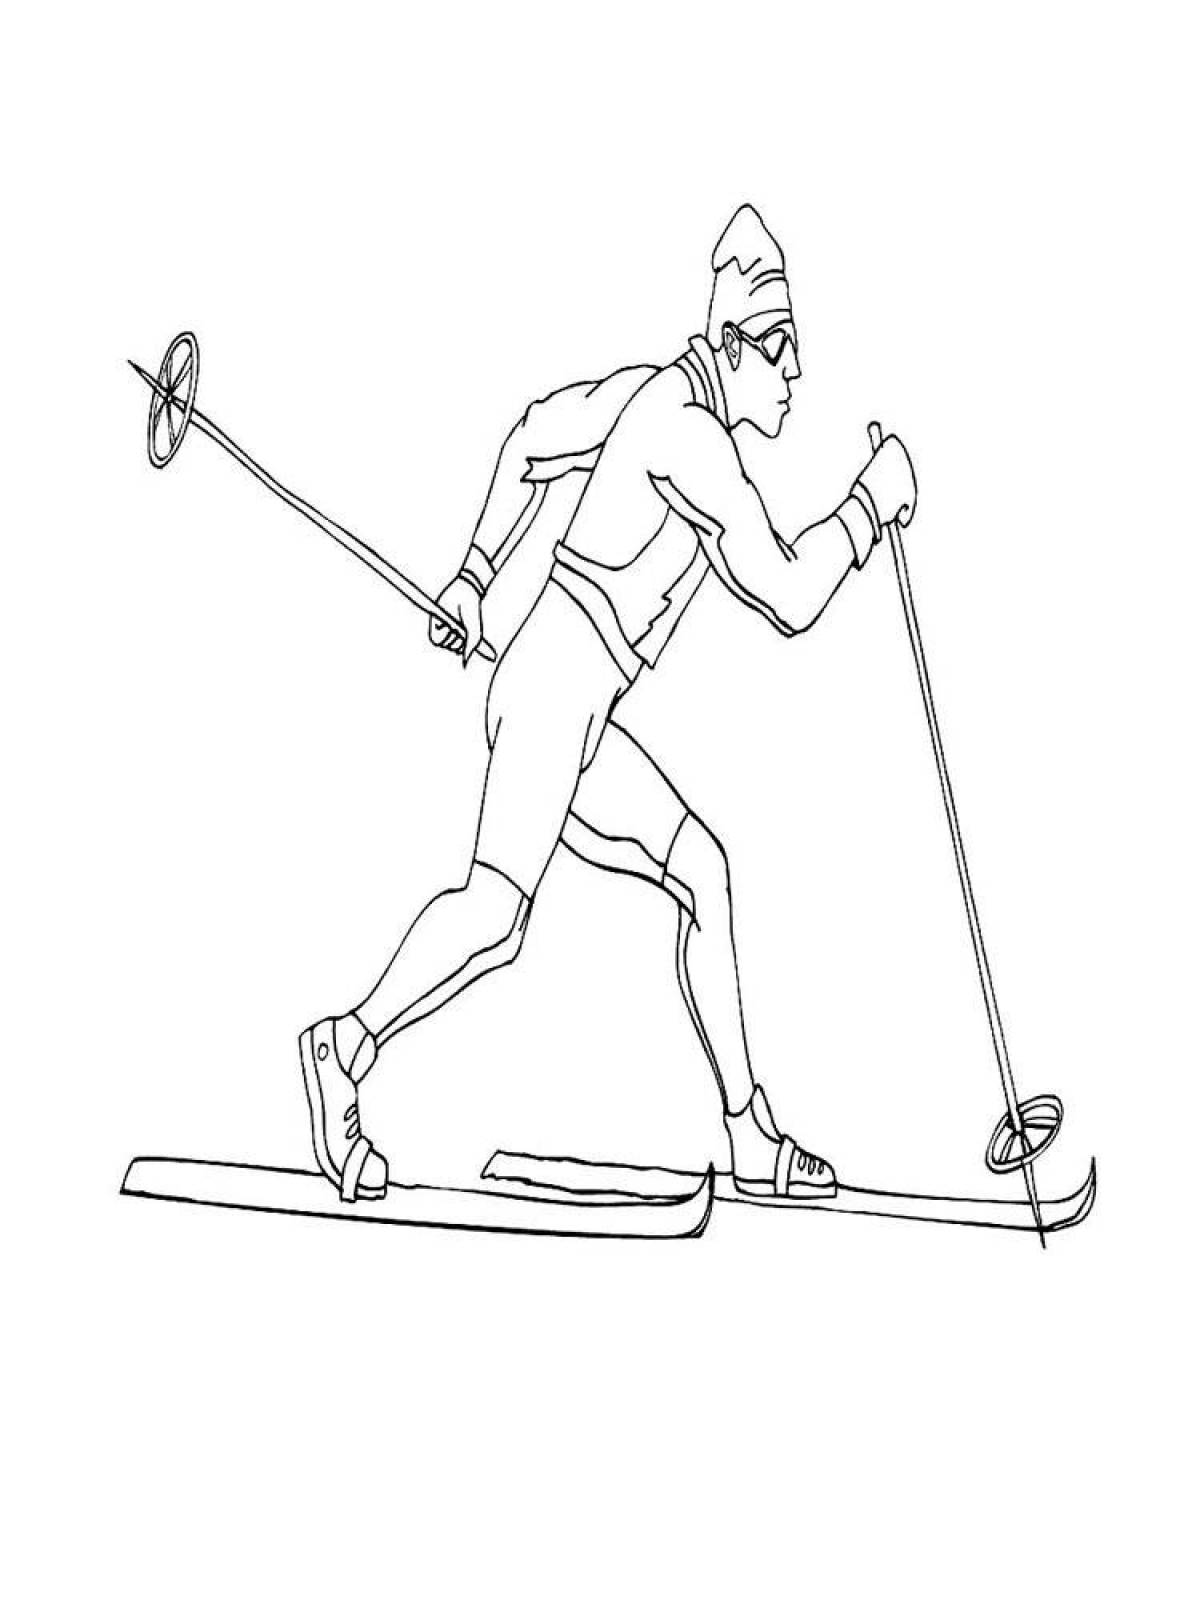 Adventurous skier coloring page